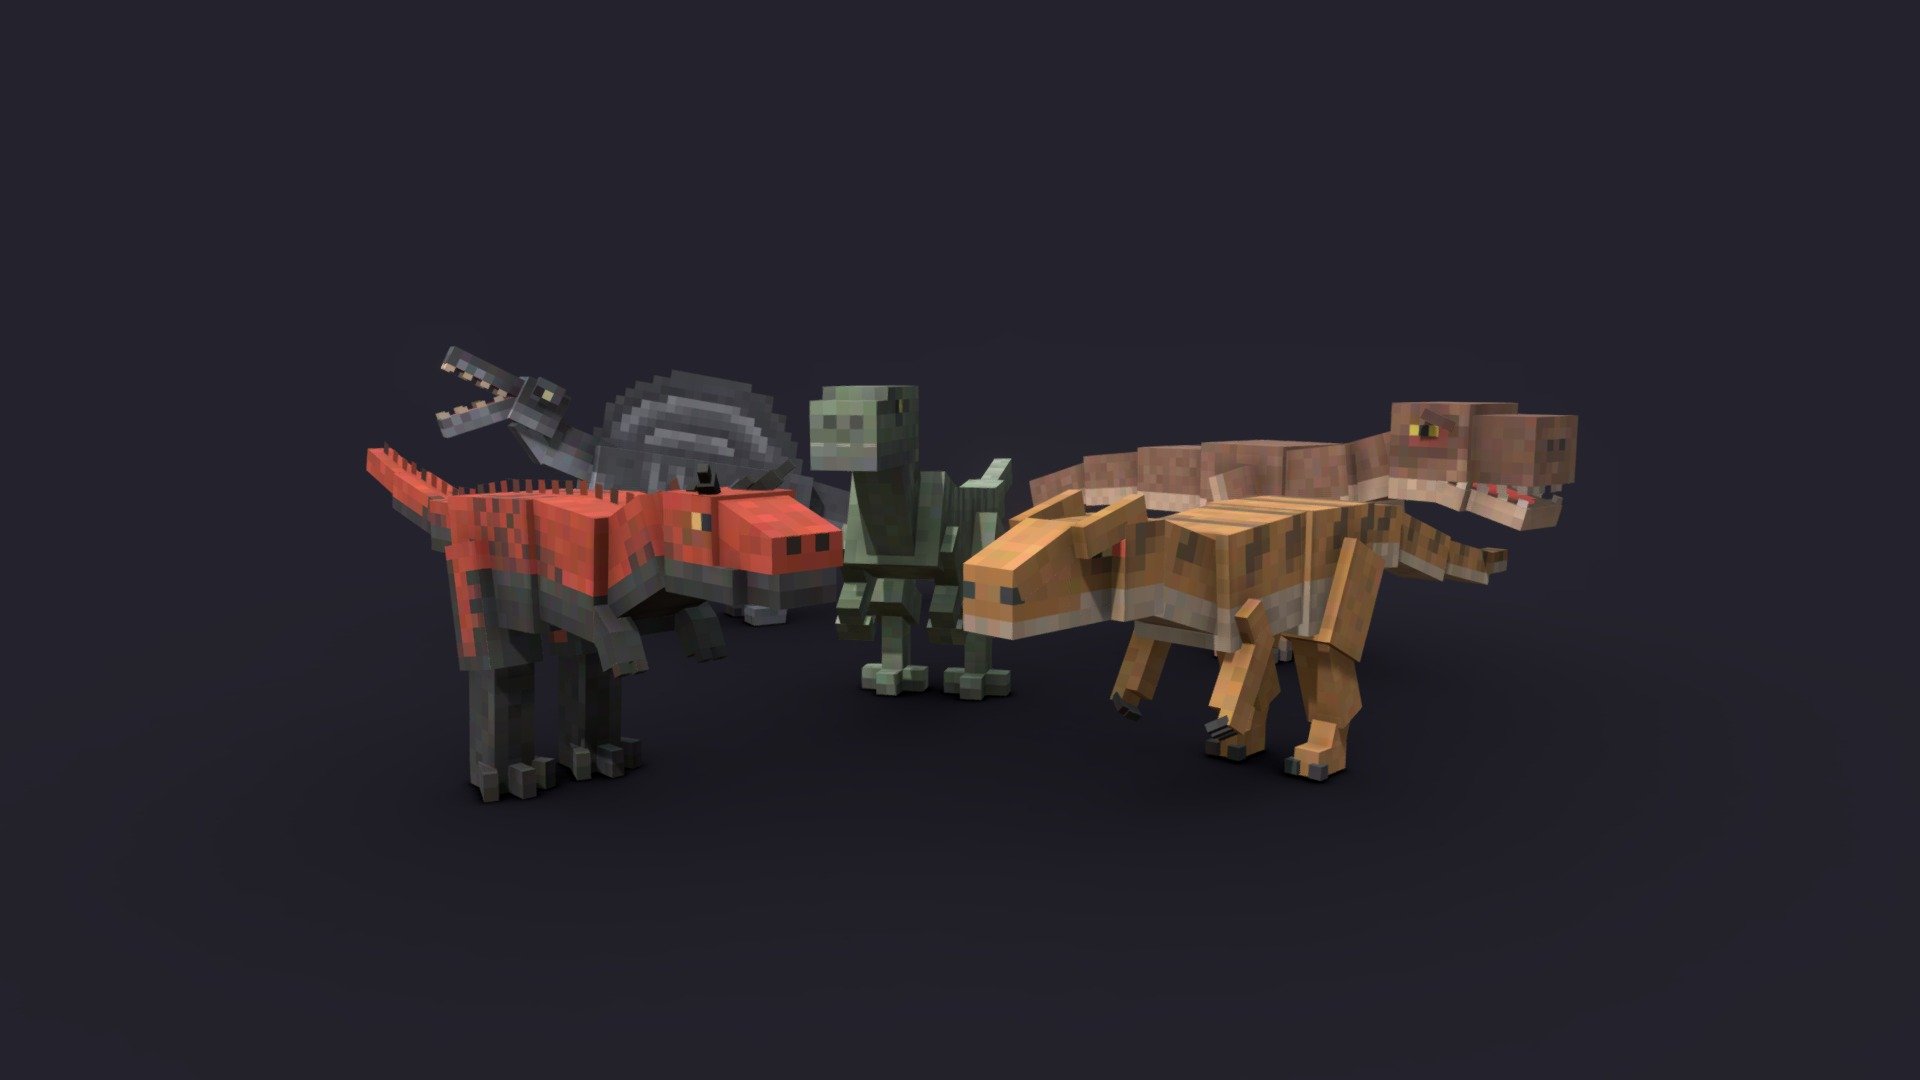 Dinosaurs 1 :)

Contact for commission work

Discord: Mladen#1776

Twitter: https://twitter.com/mmladenn

Modeled in Blockbench - Dinosaurs 1 - 3D model by Mladen (@mladen123) 3d model